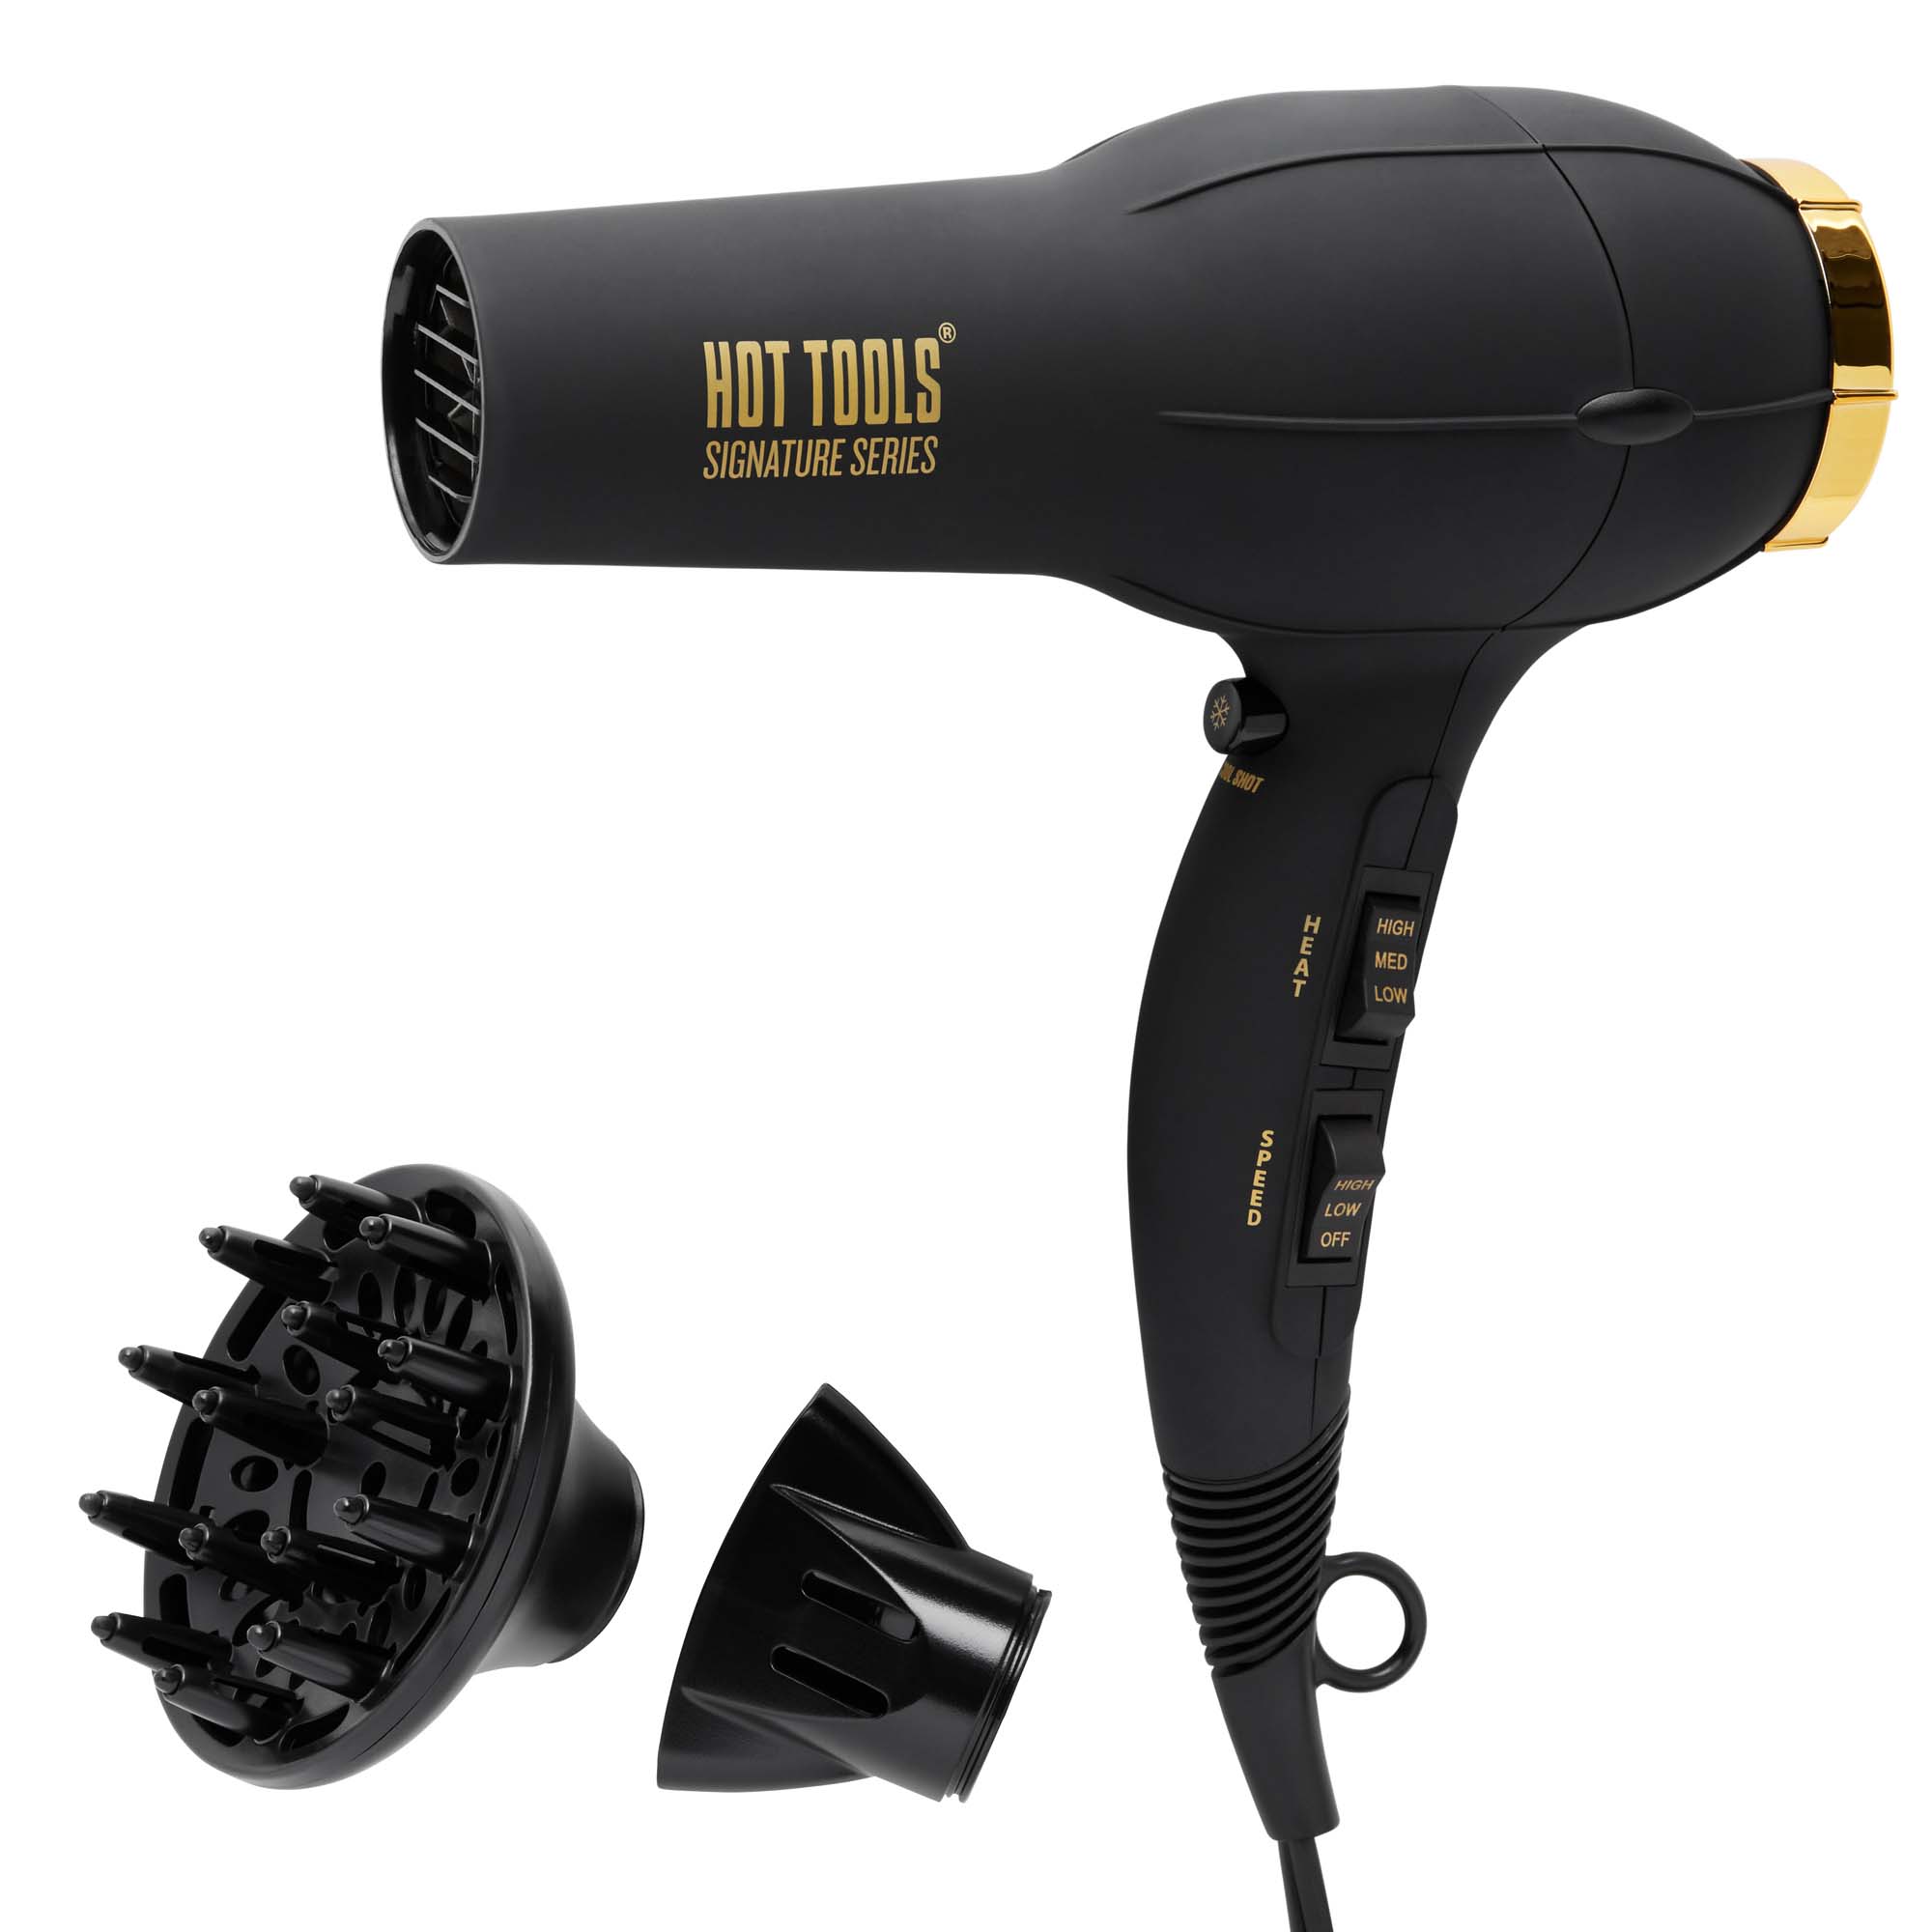 Hot Tools Pro Signature 1875W Ionic Hair Dryer, Black - image 1 of 7